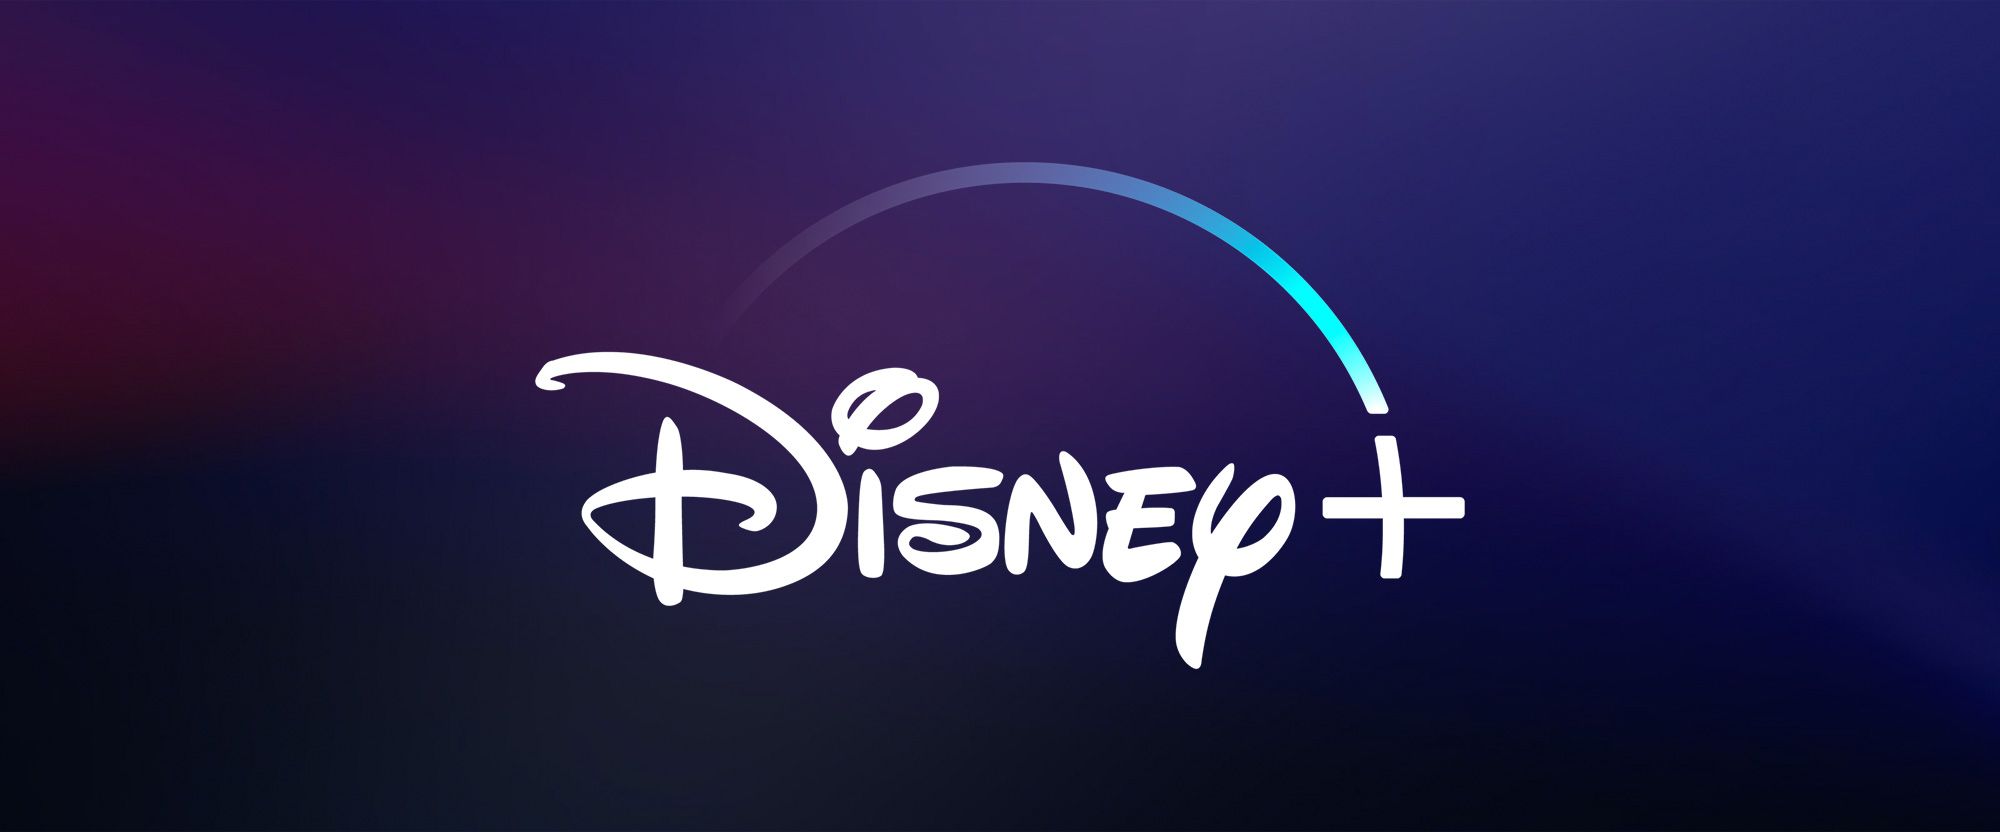 Disney Plus Neon Logo Wallpapers